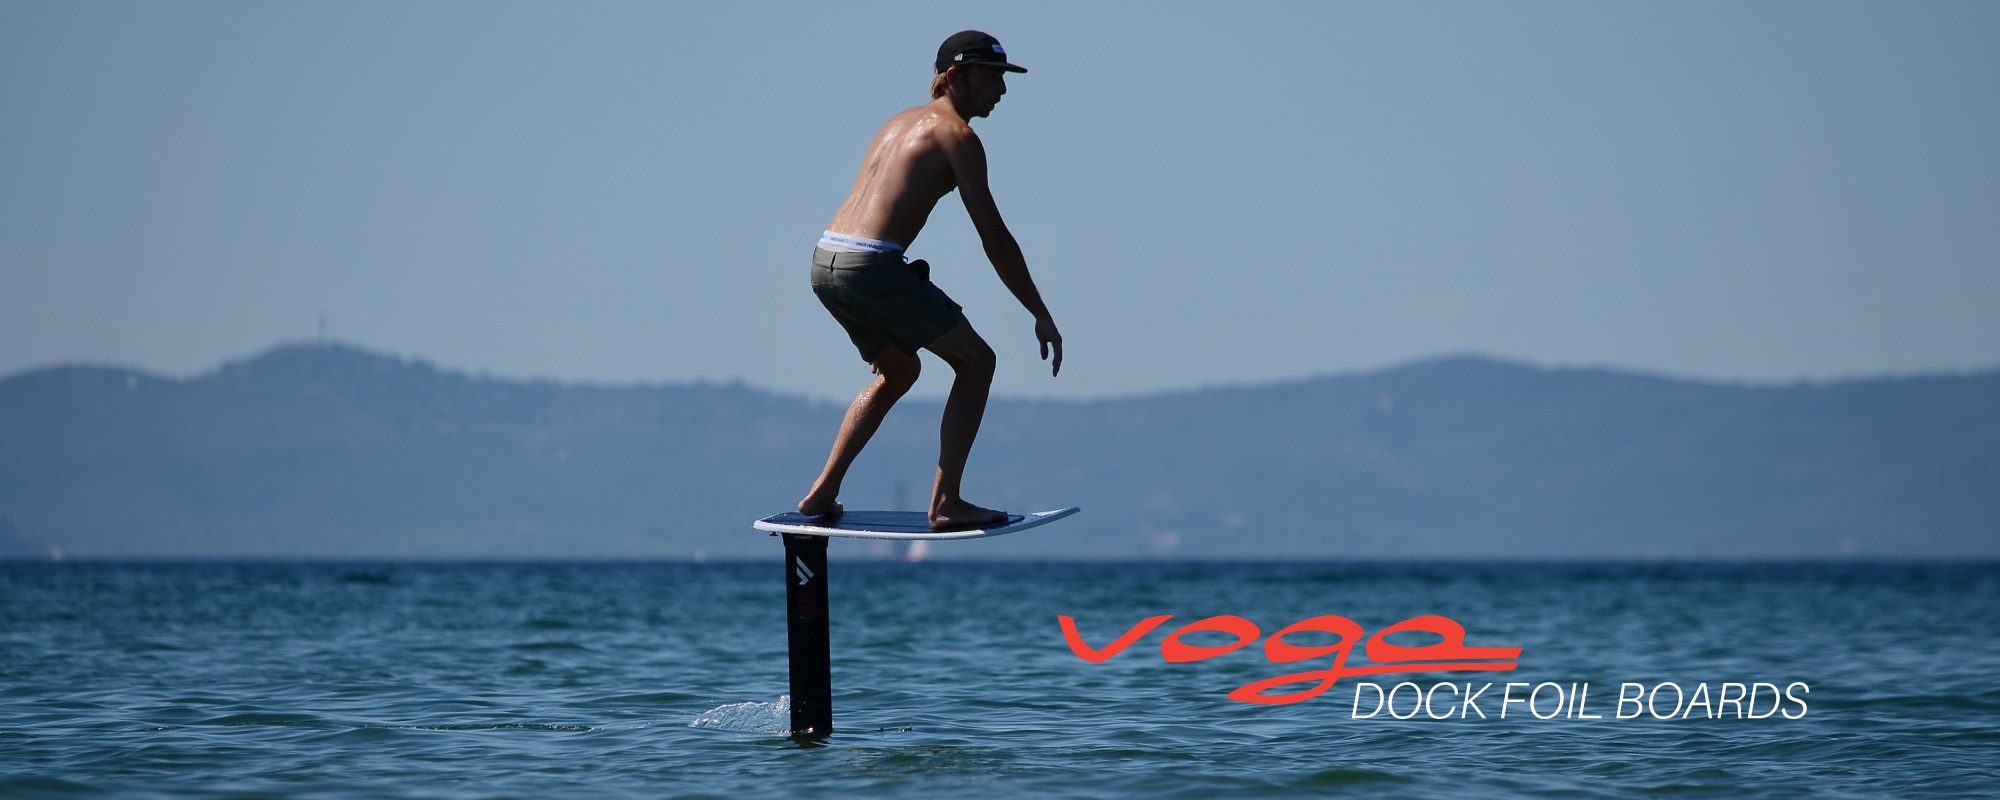 Voga Marine Products : dock foil board range